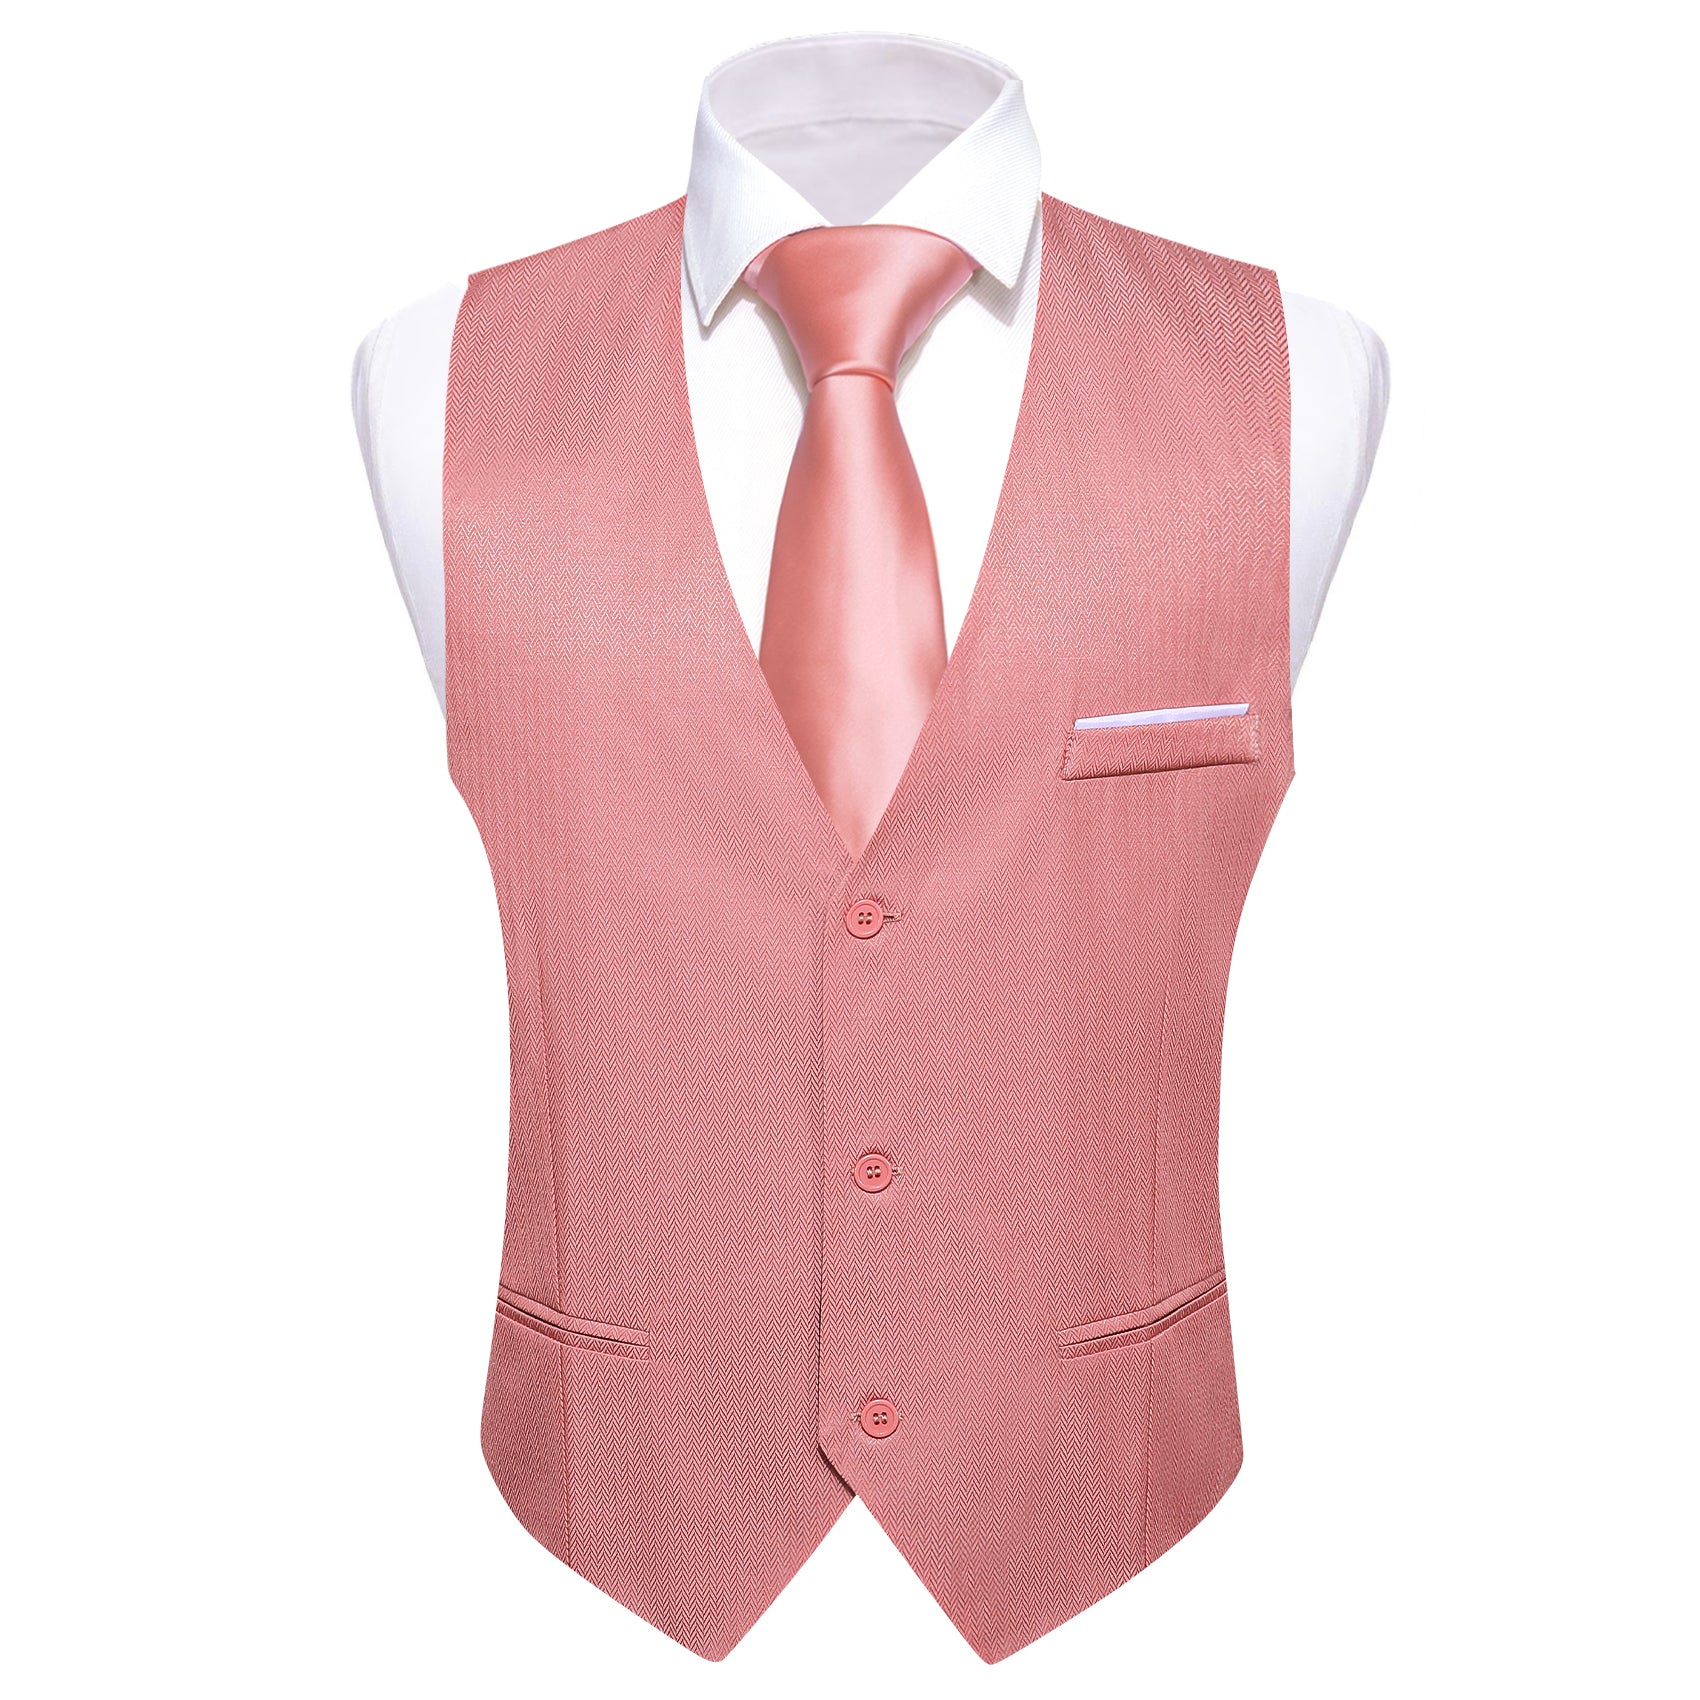 Men's Light Red Solid Vest Suit for Business